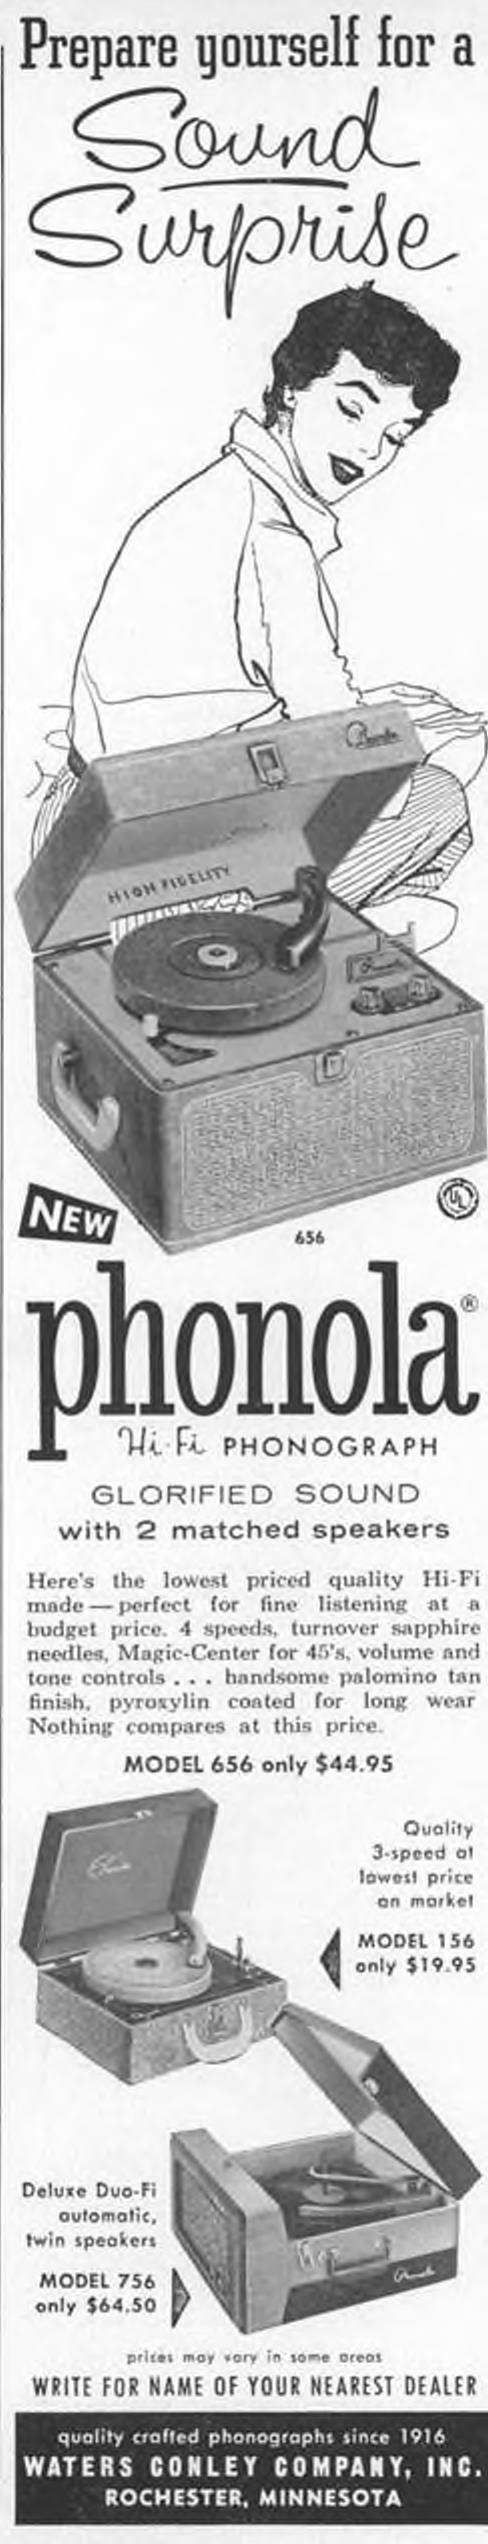 Phomola 1956.jpg